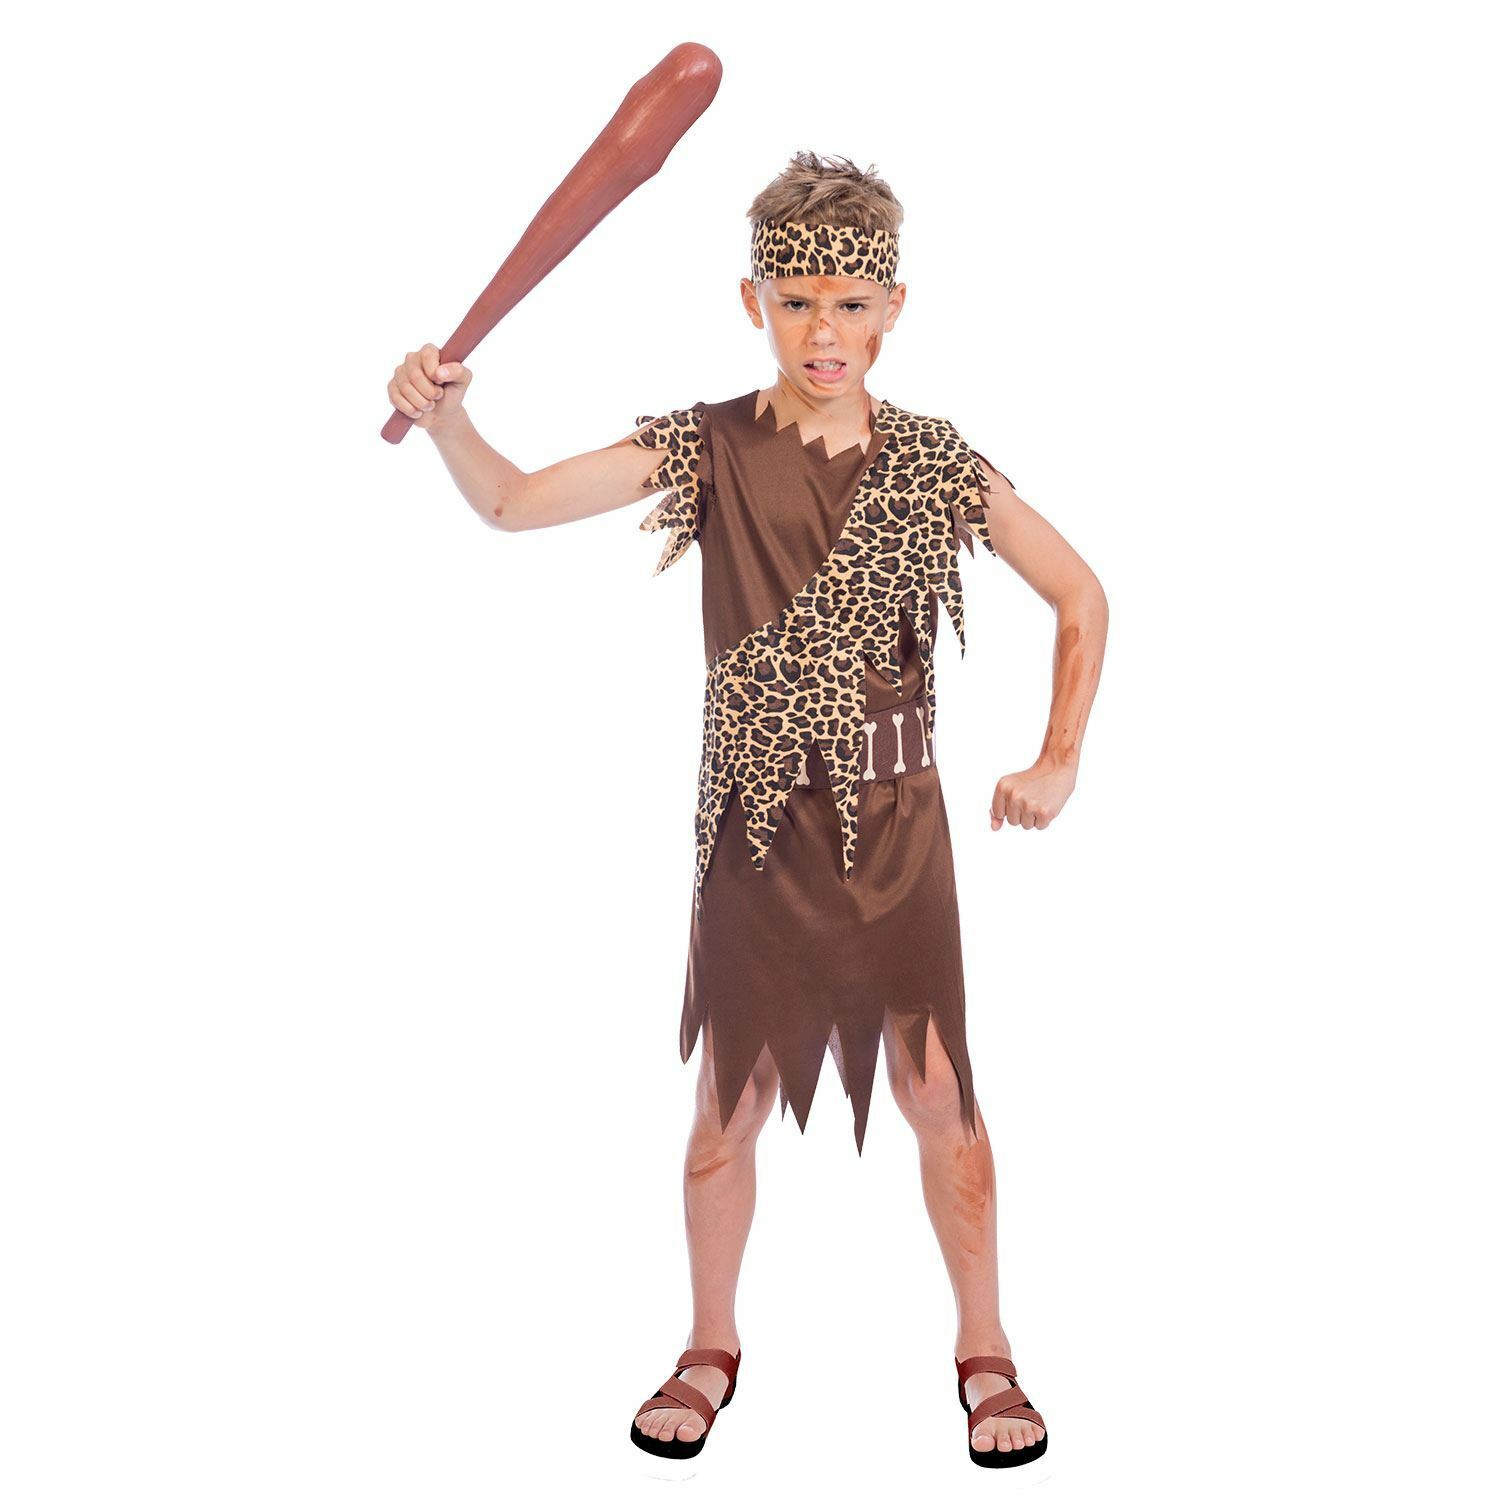 Caveman costume.